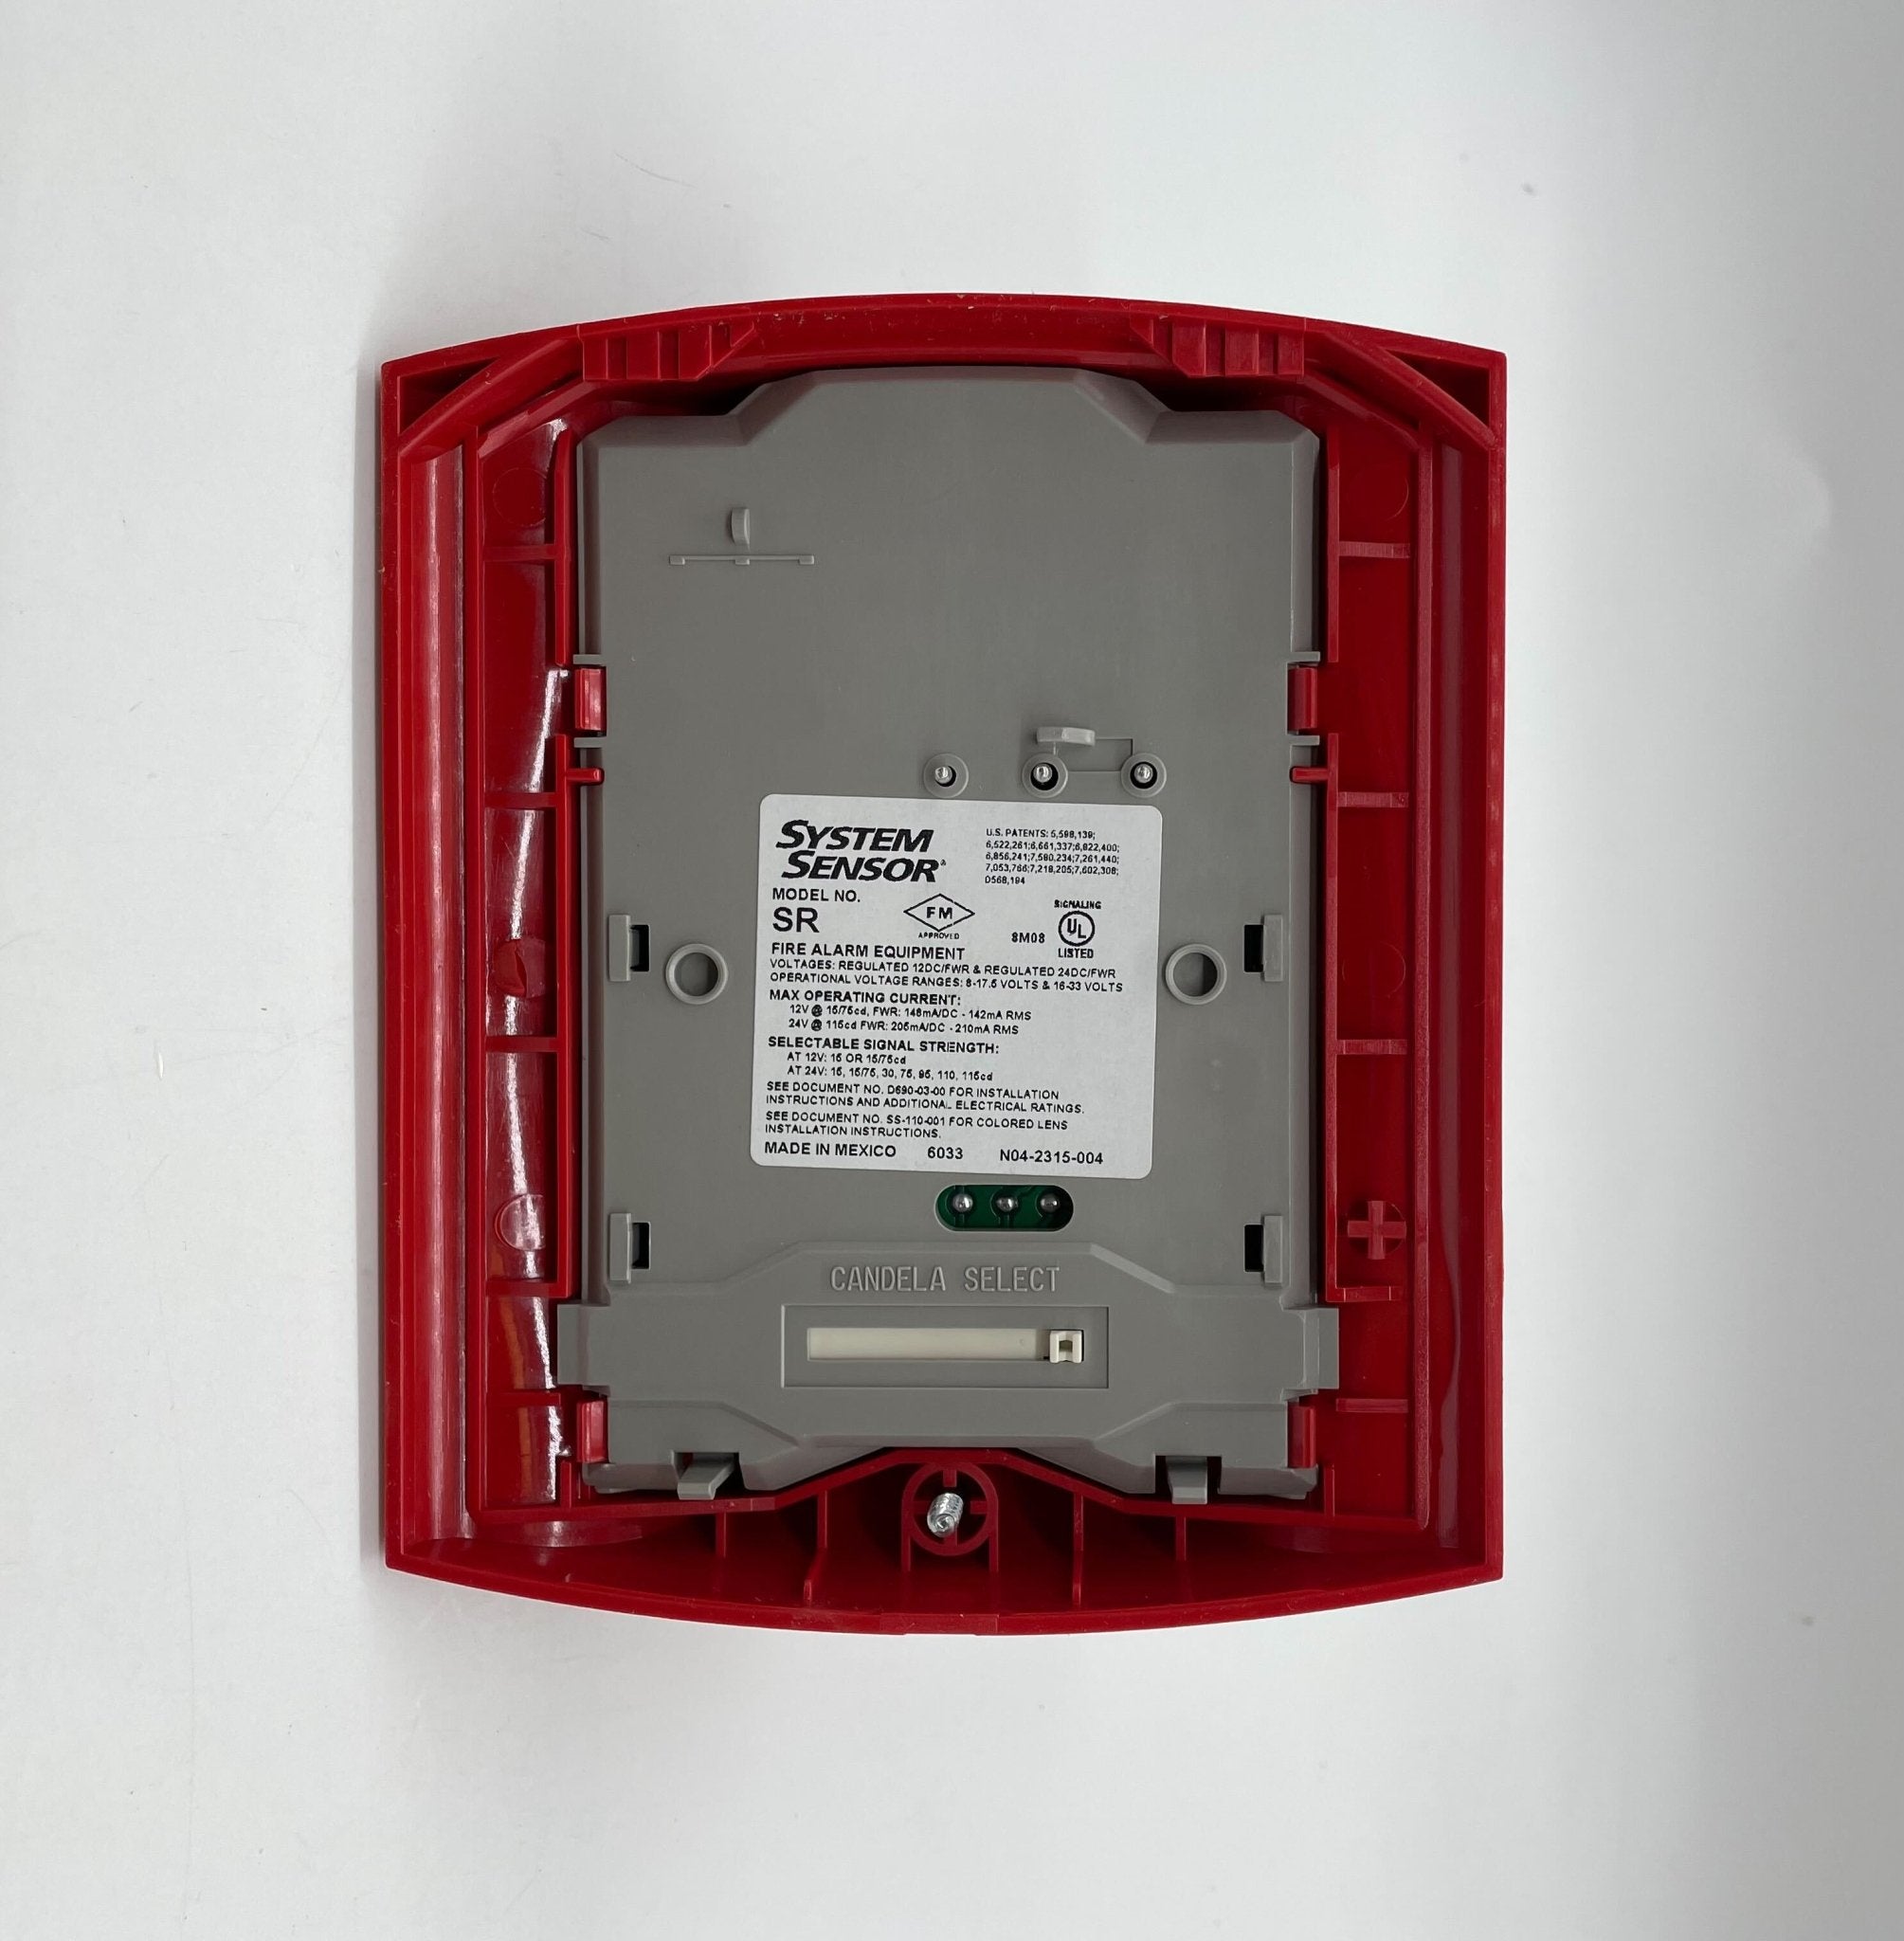 System Sensor SR - The Fire Alarm Supplier